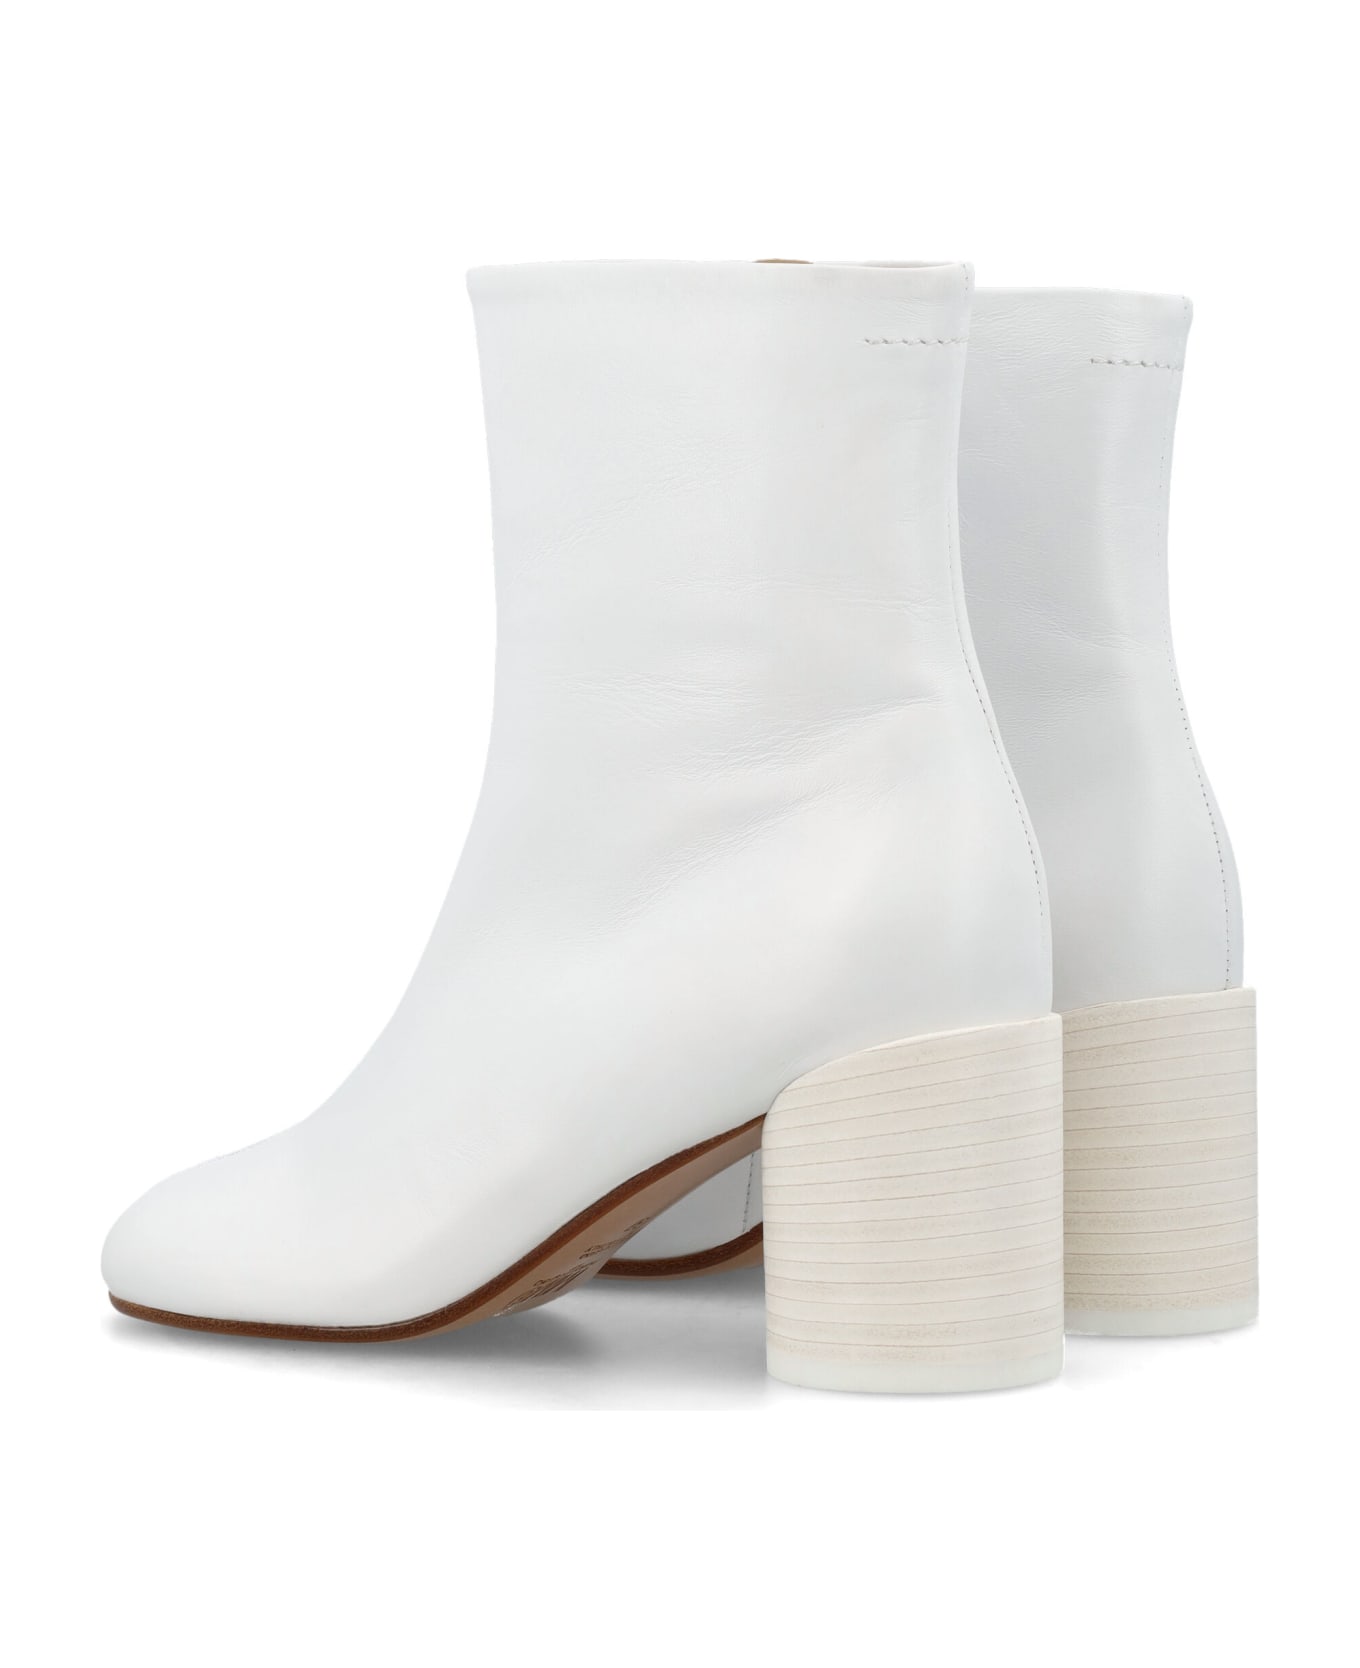 MM6 Maison Margiela Anatomic Ankle Boots - Bright White